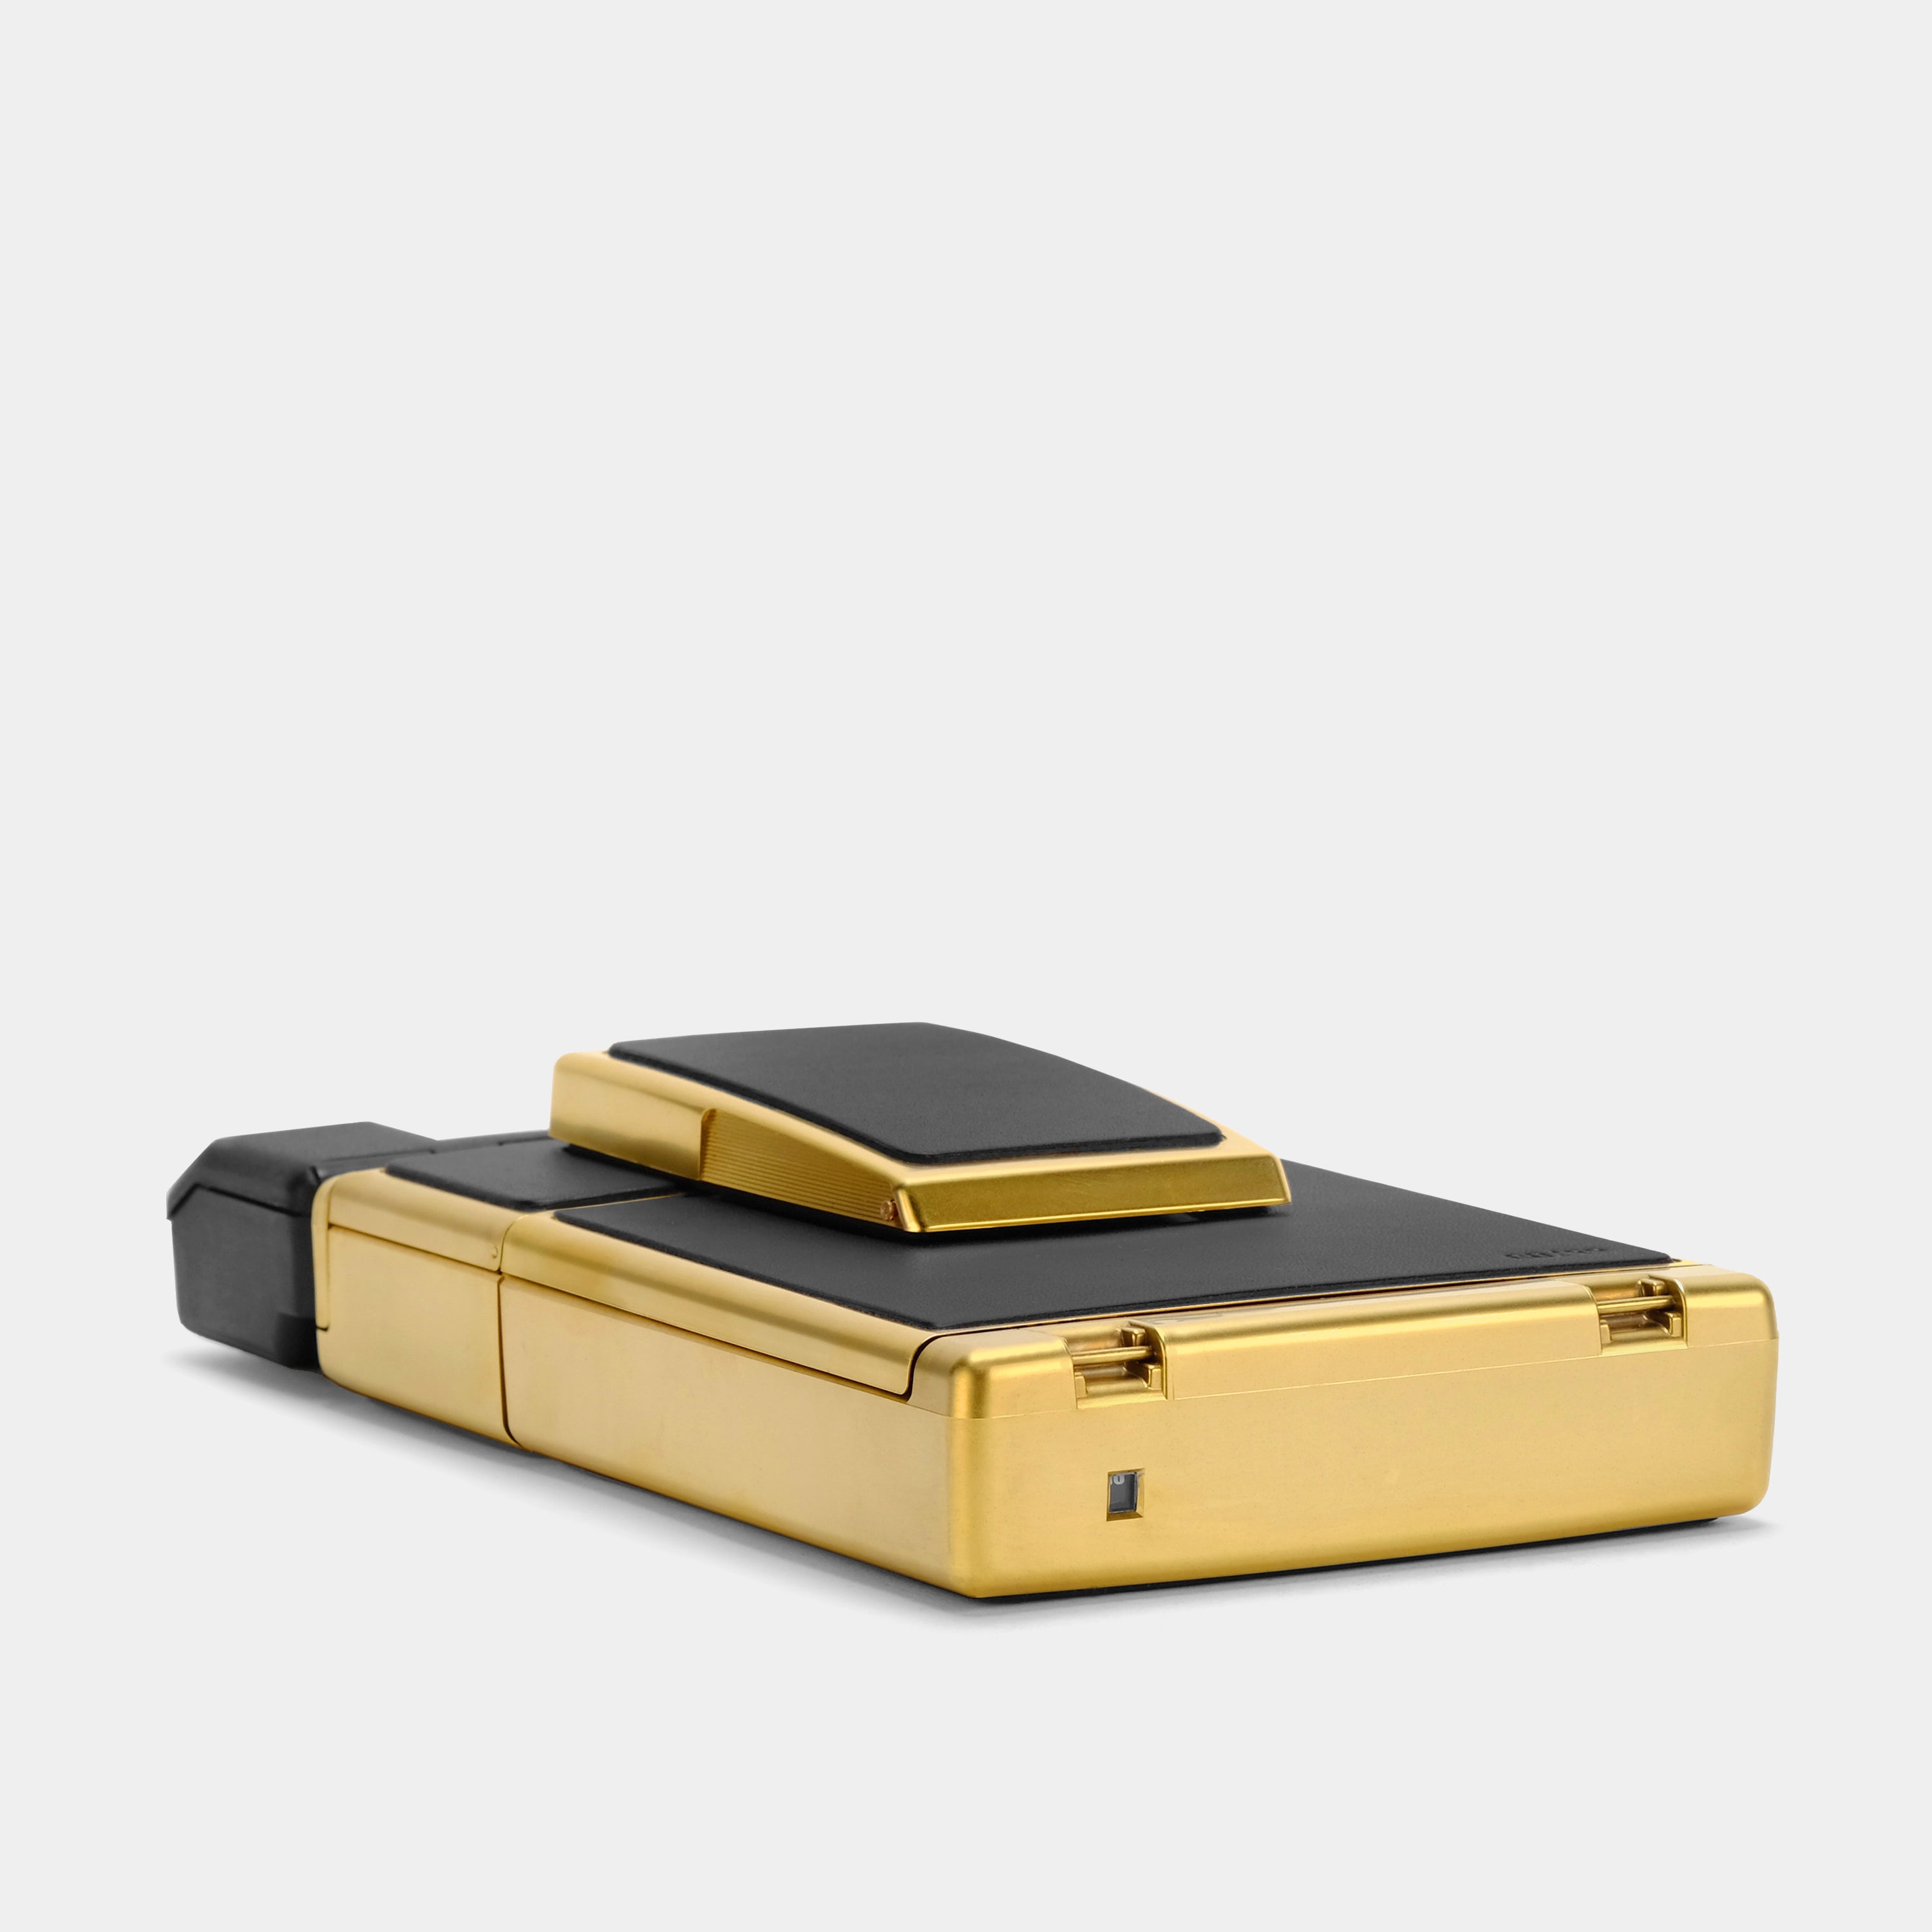 SX-70 Sonar Autofocus "24K Gold Edition" Instant Film Camera